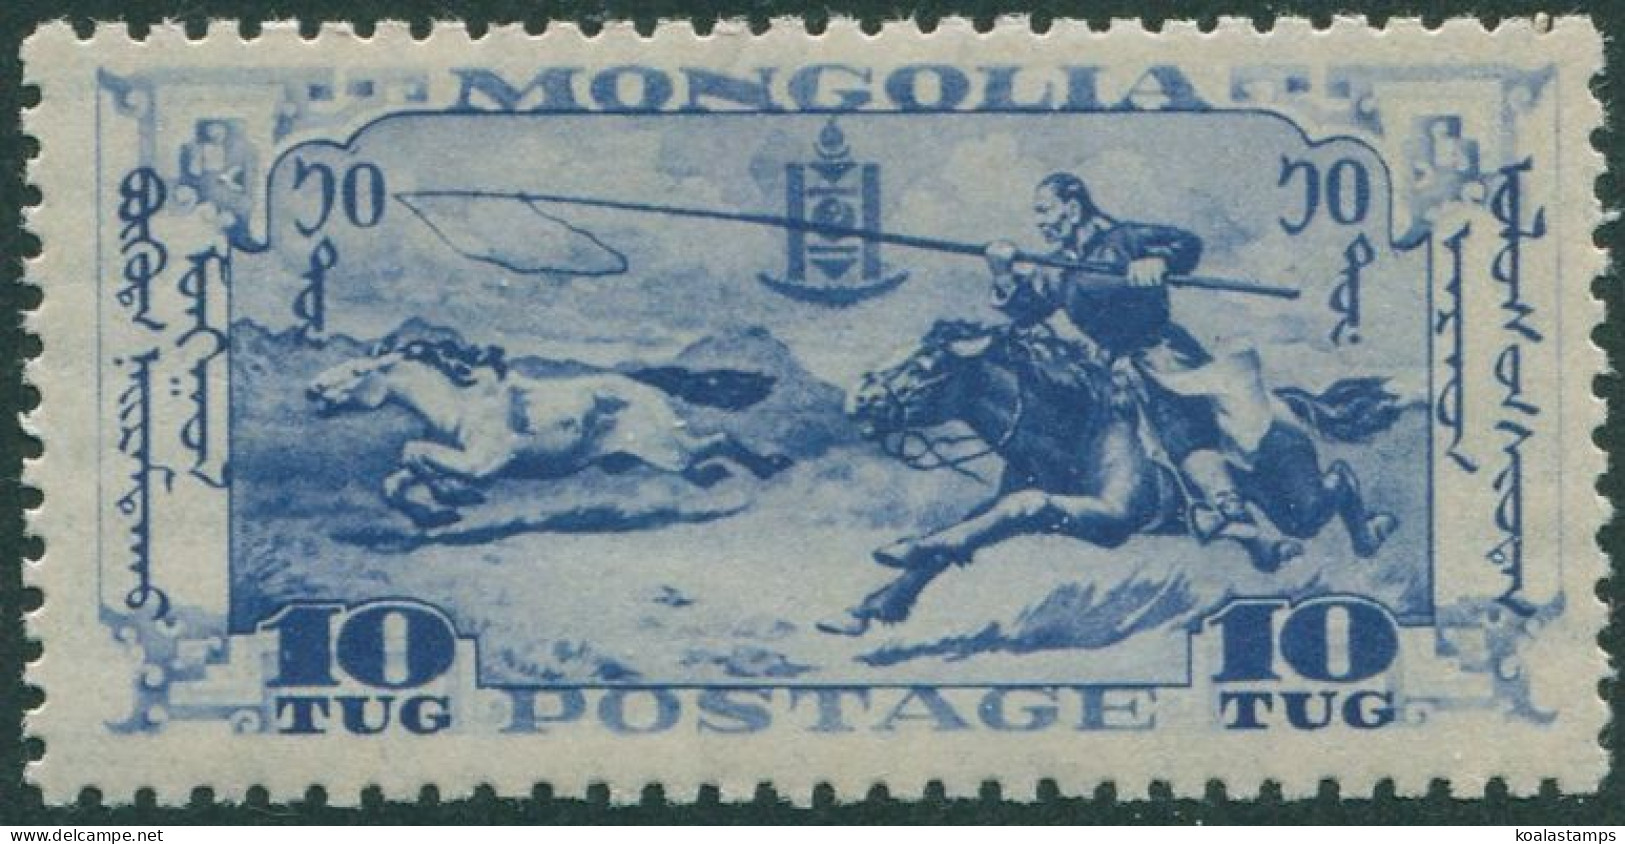 Mongolia 1932 SG58 10t Lassoing Wild Horses Painting MNH - Mongolia